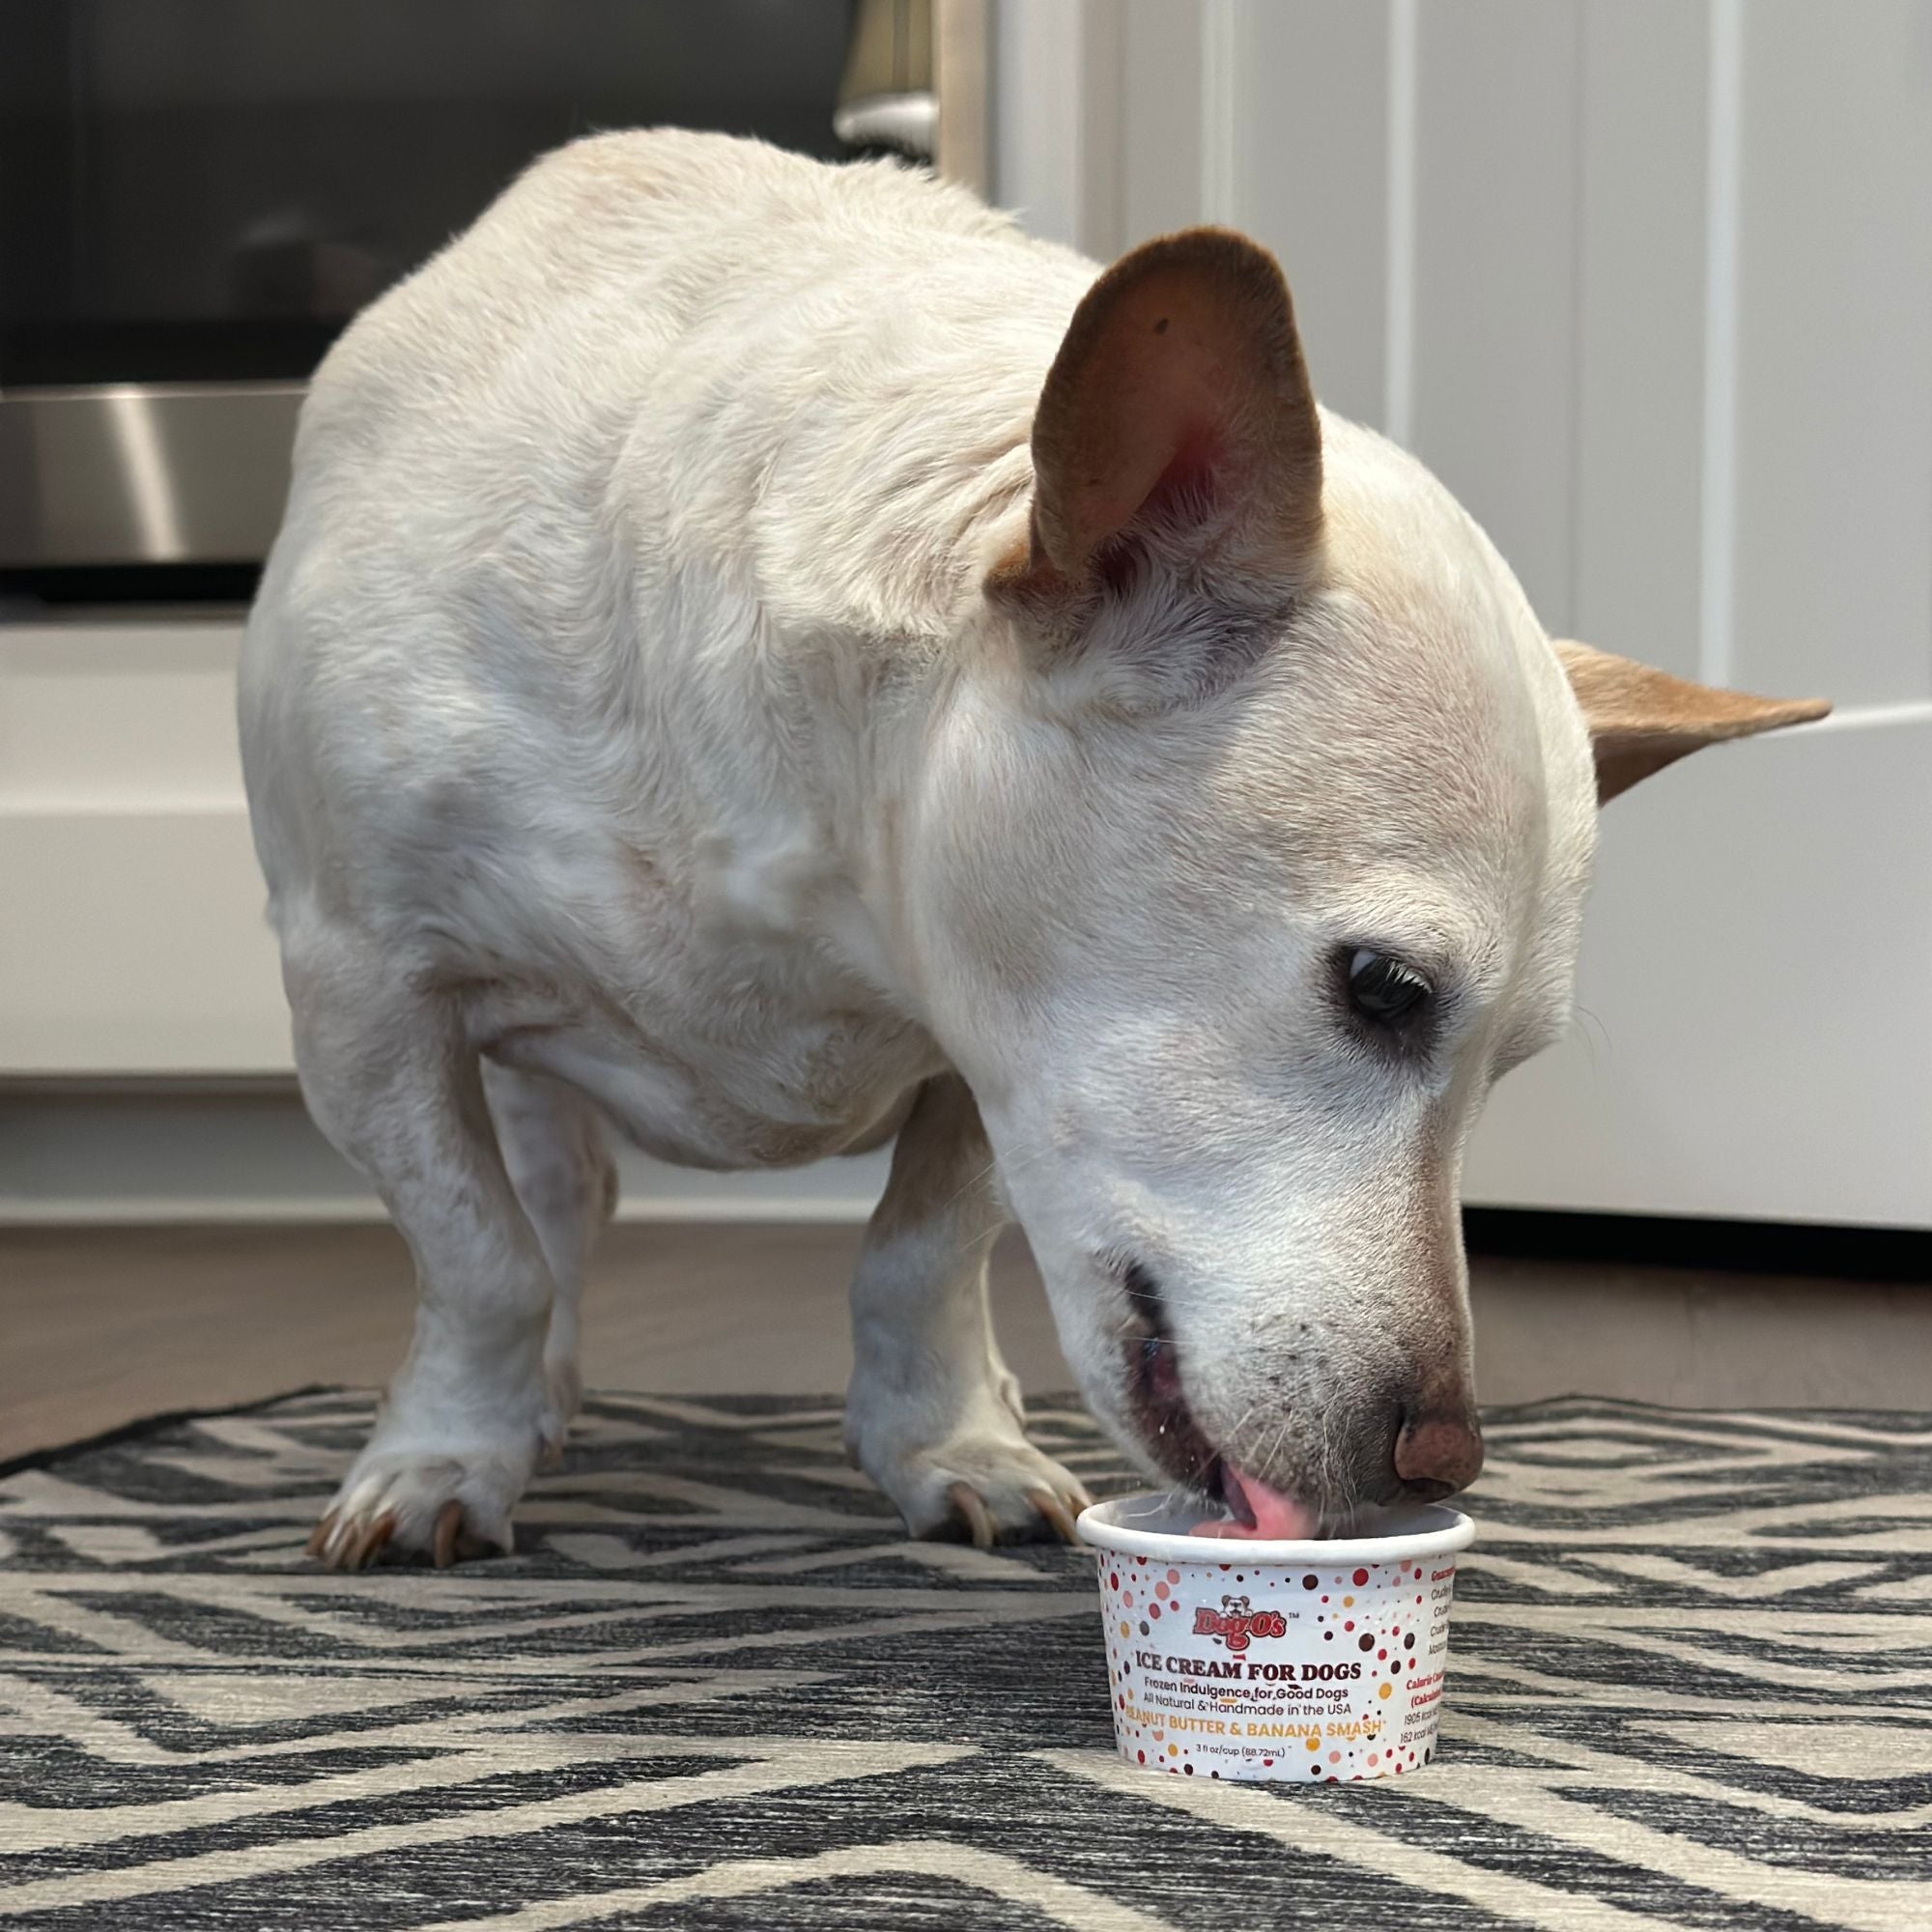 Original Flavor, Ice Cream for Dogs